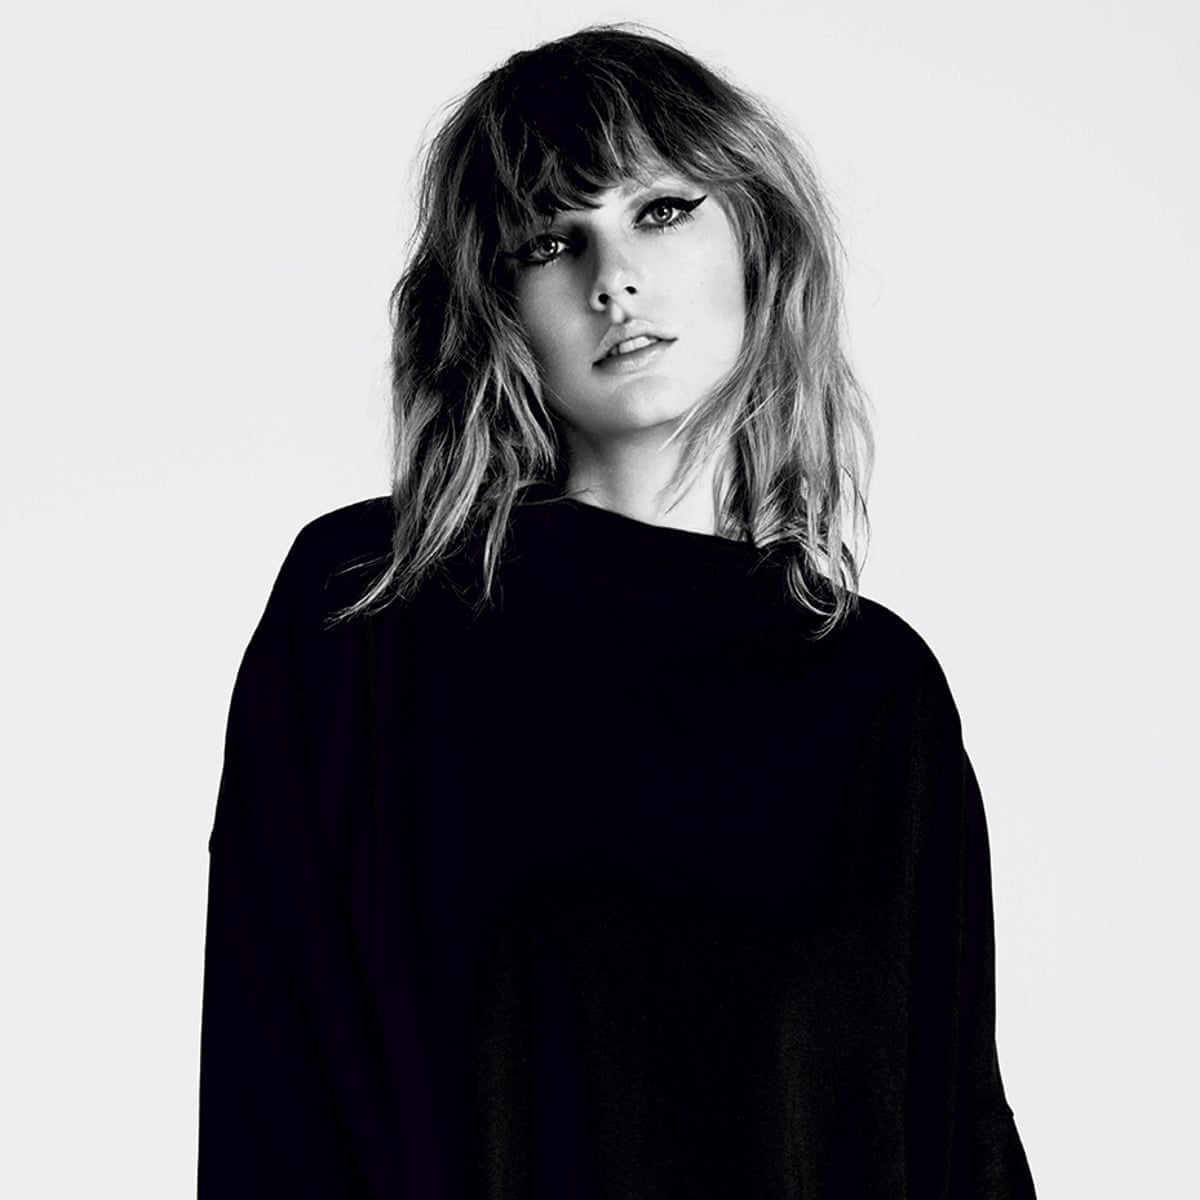 Taylor Swift's reputation: will her new album silence her critics?, Taylor  Swift